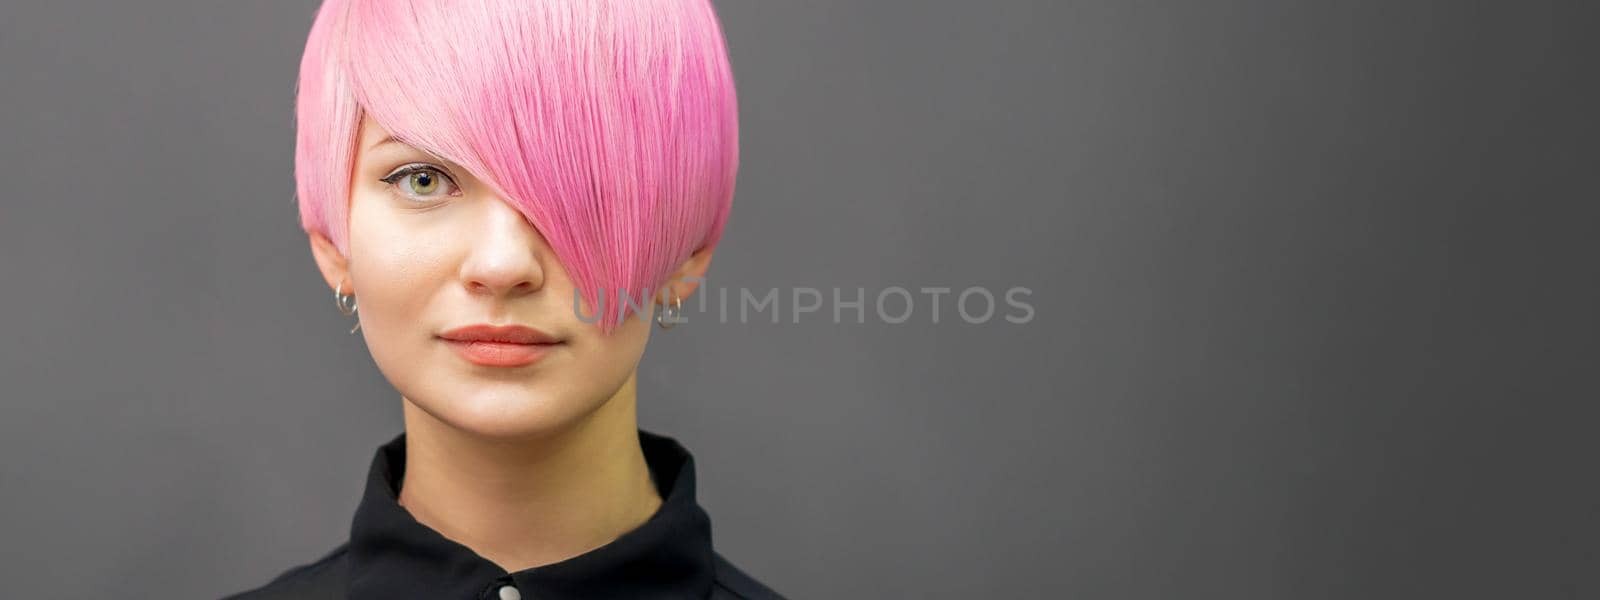 Woman with short bright pink hair by okskukuruza